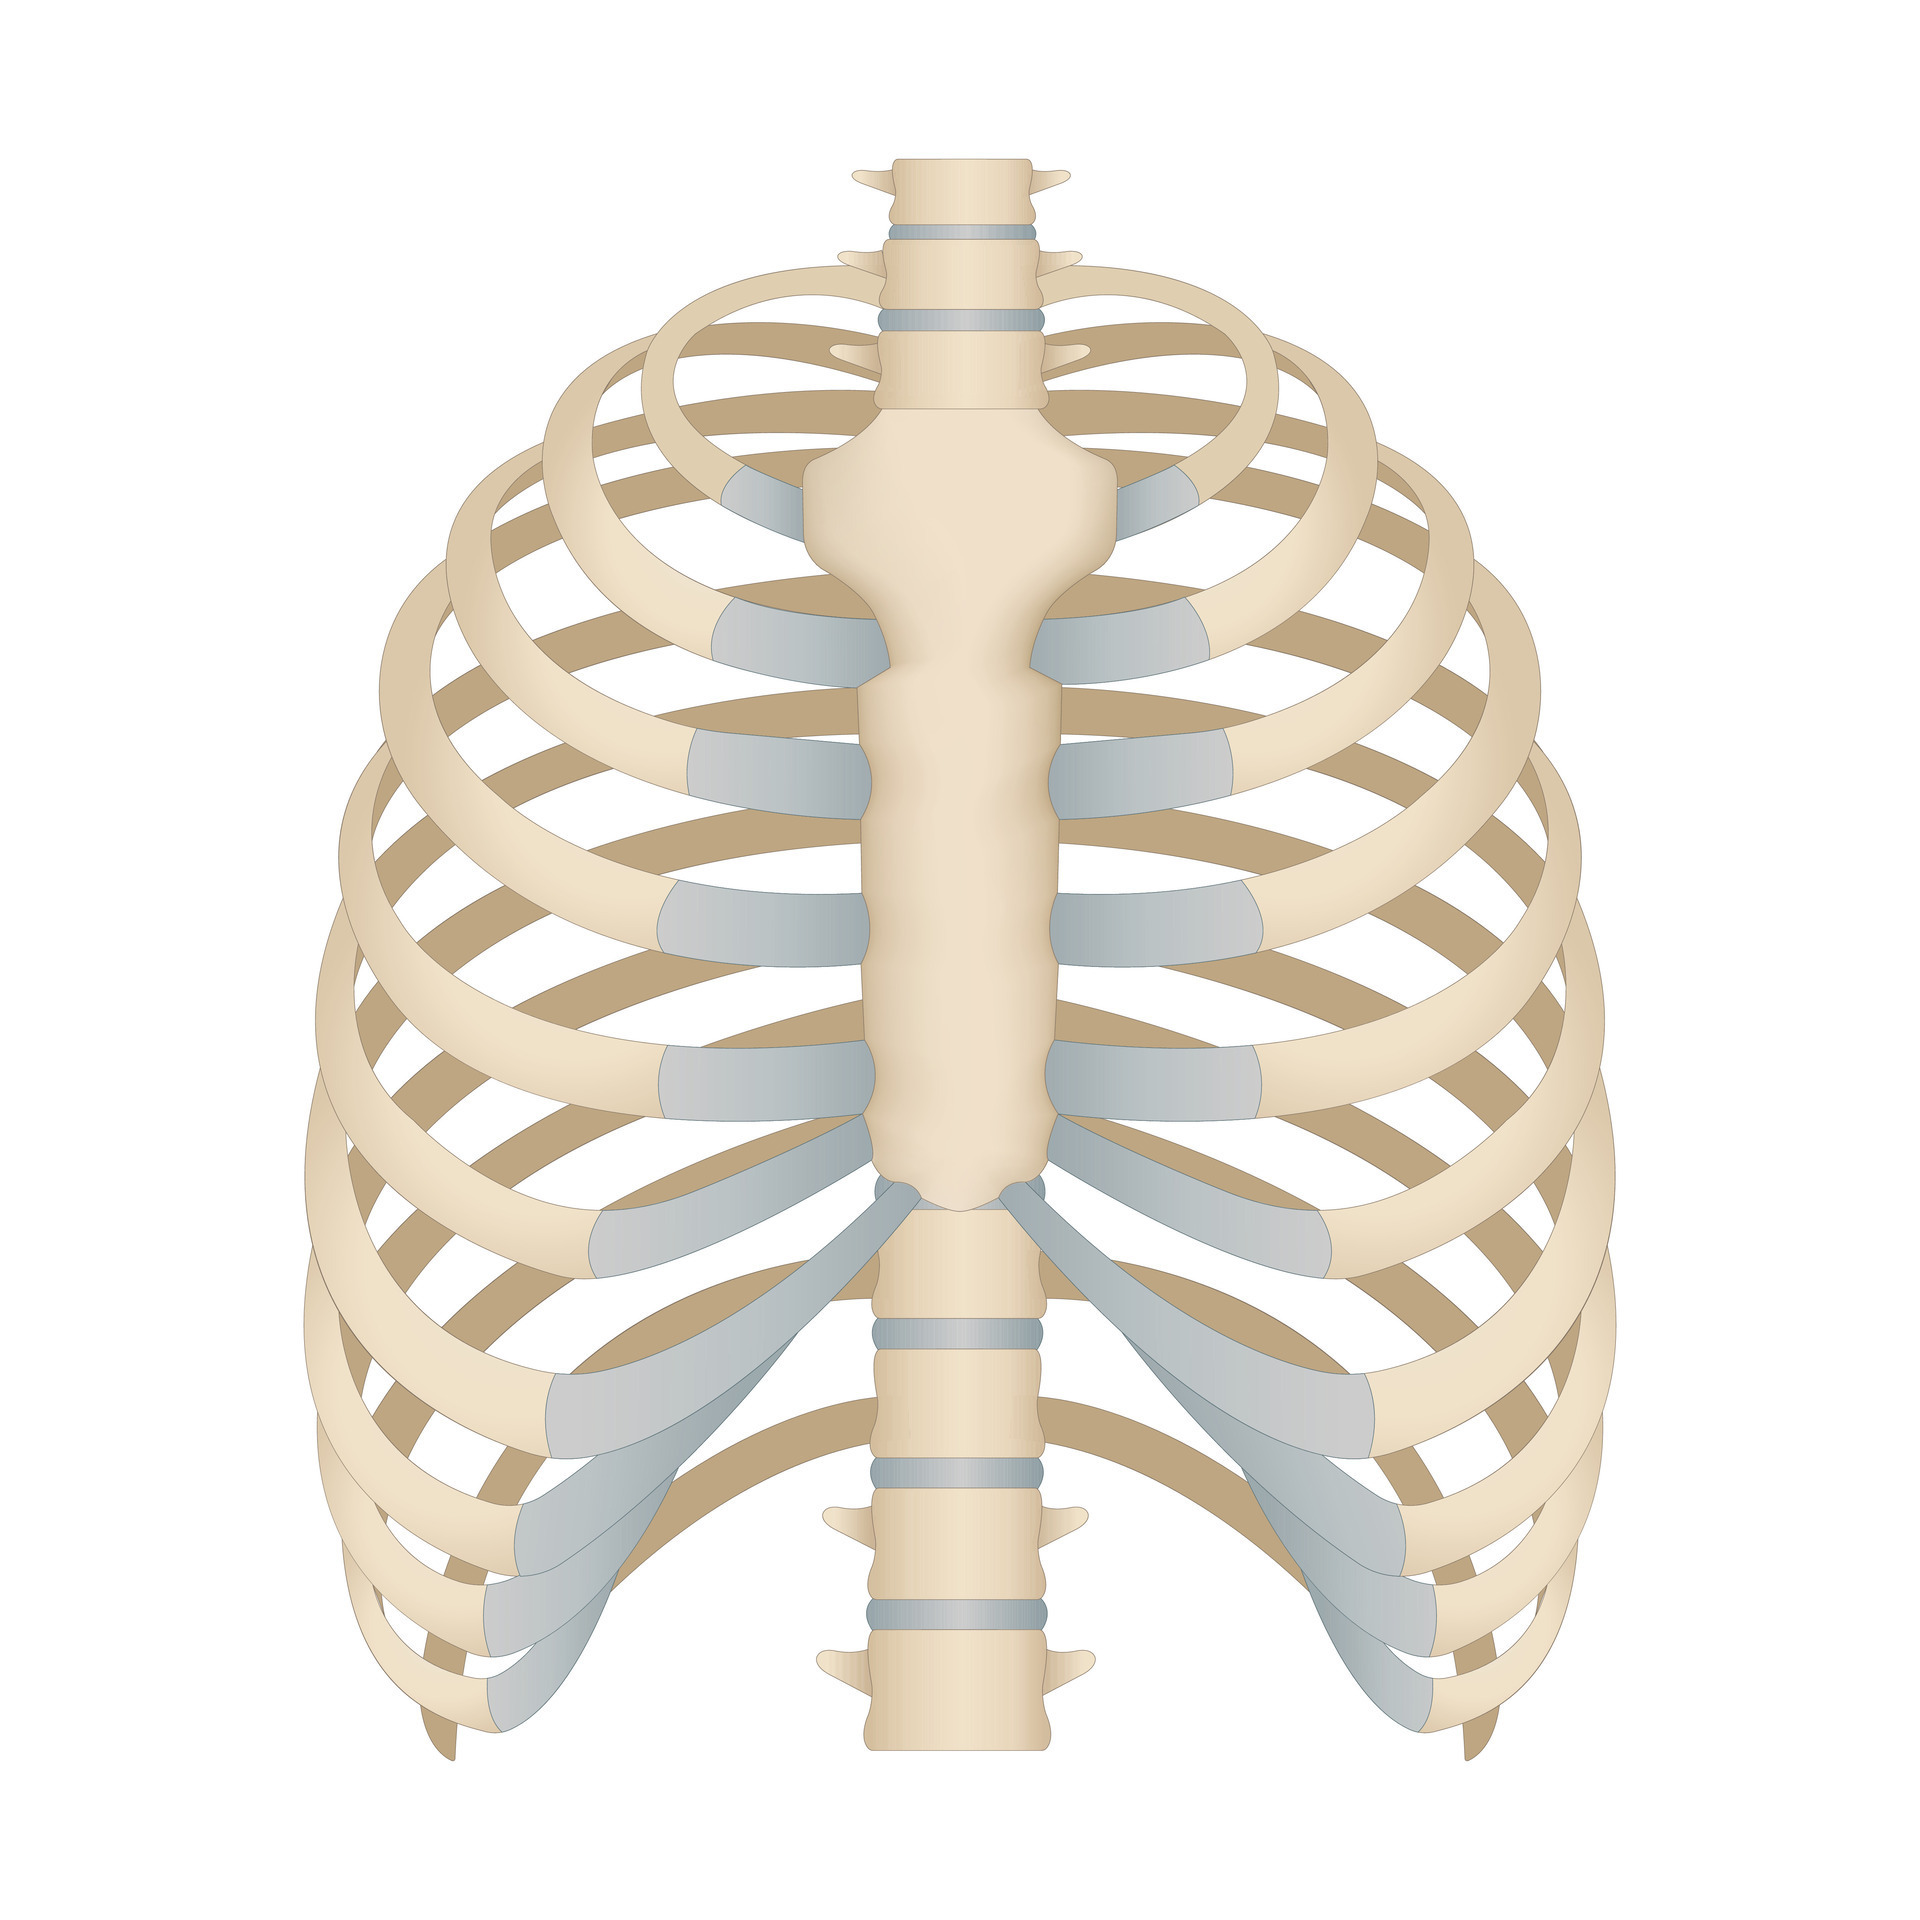 Bones of the human chest. Skeletal system for a medicine poster ...